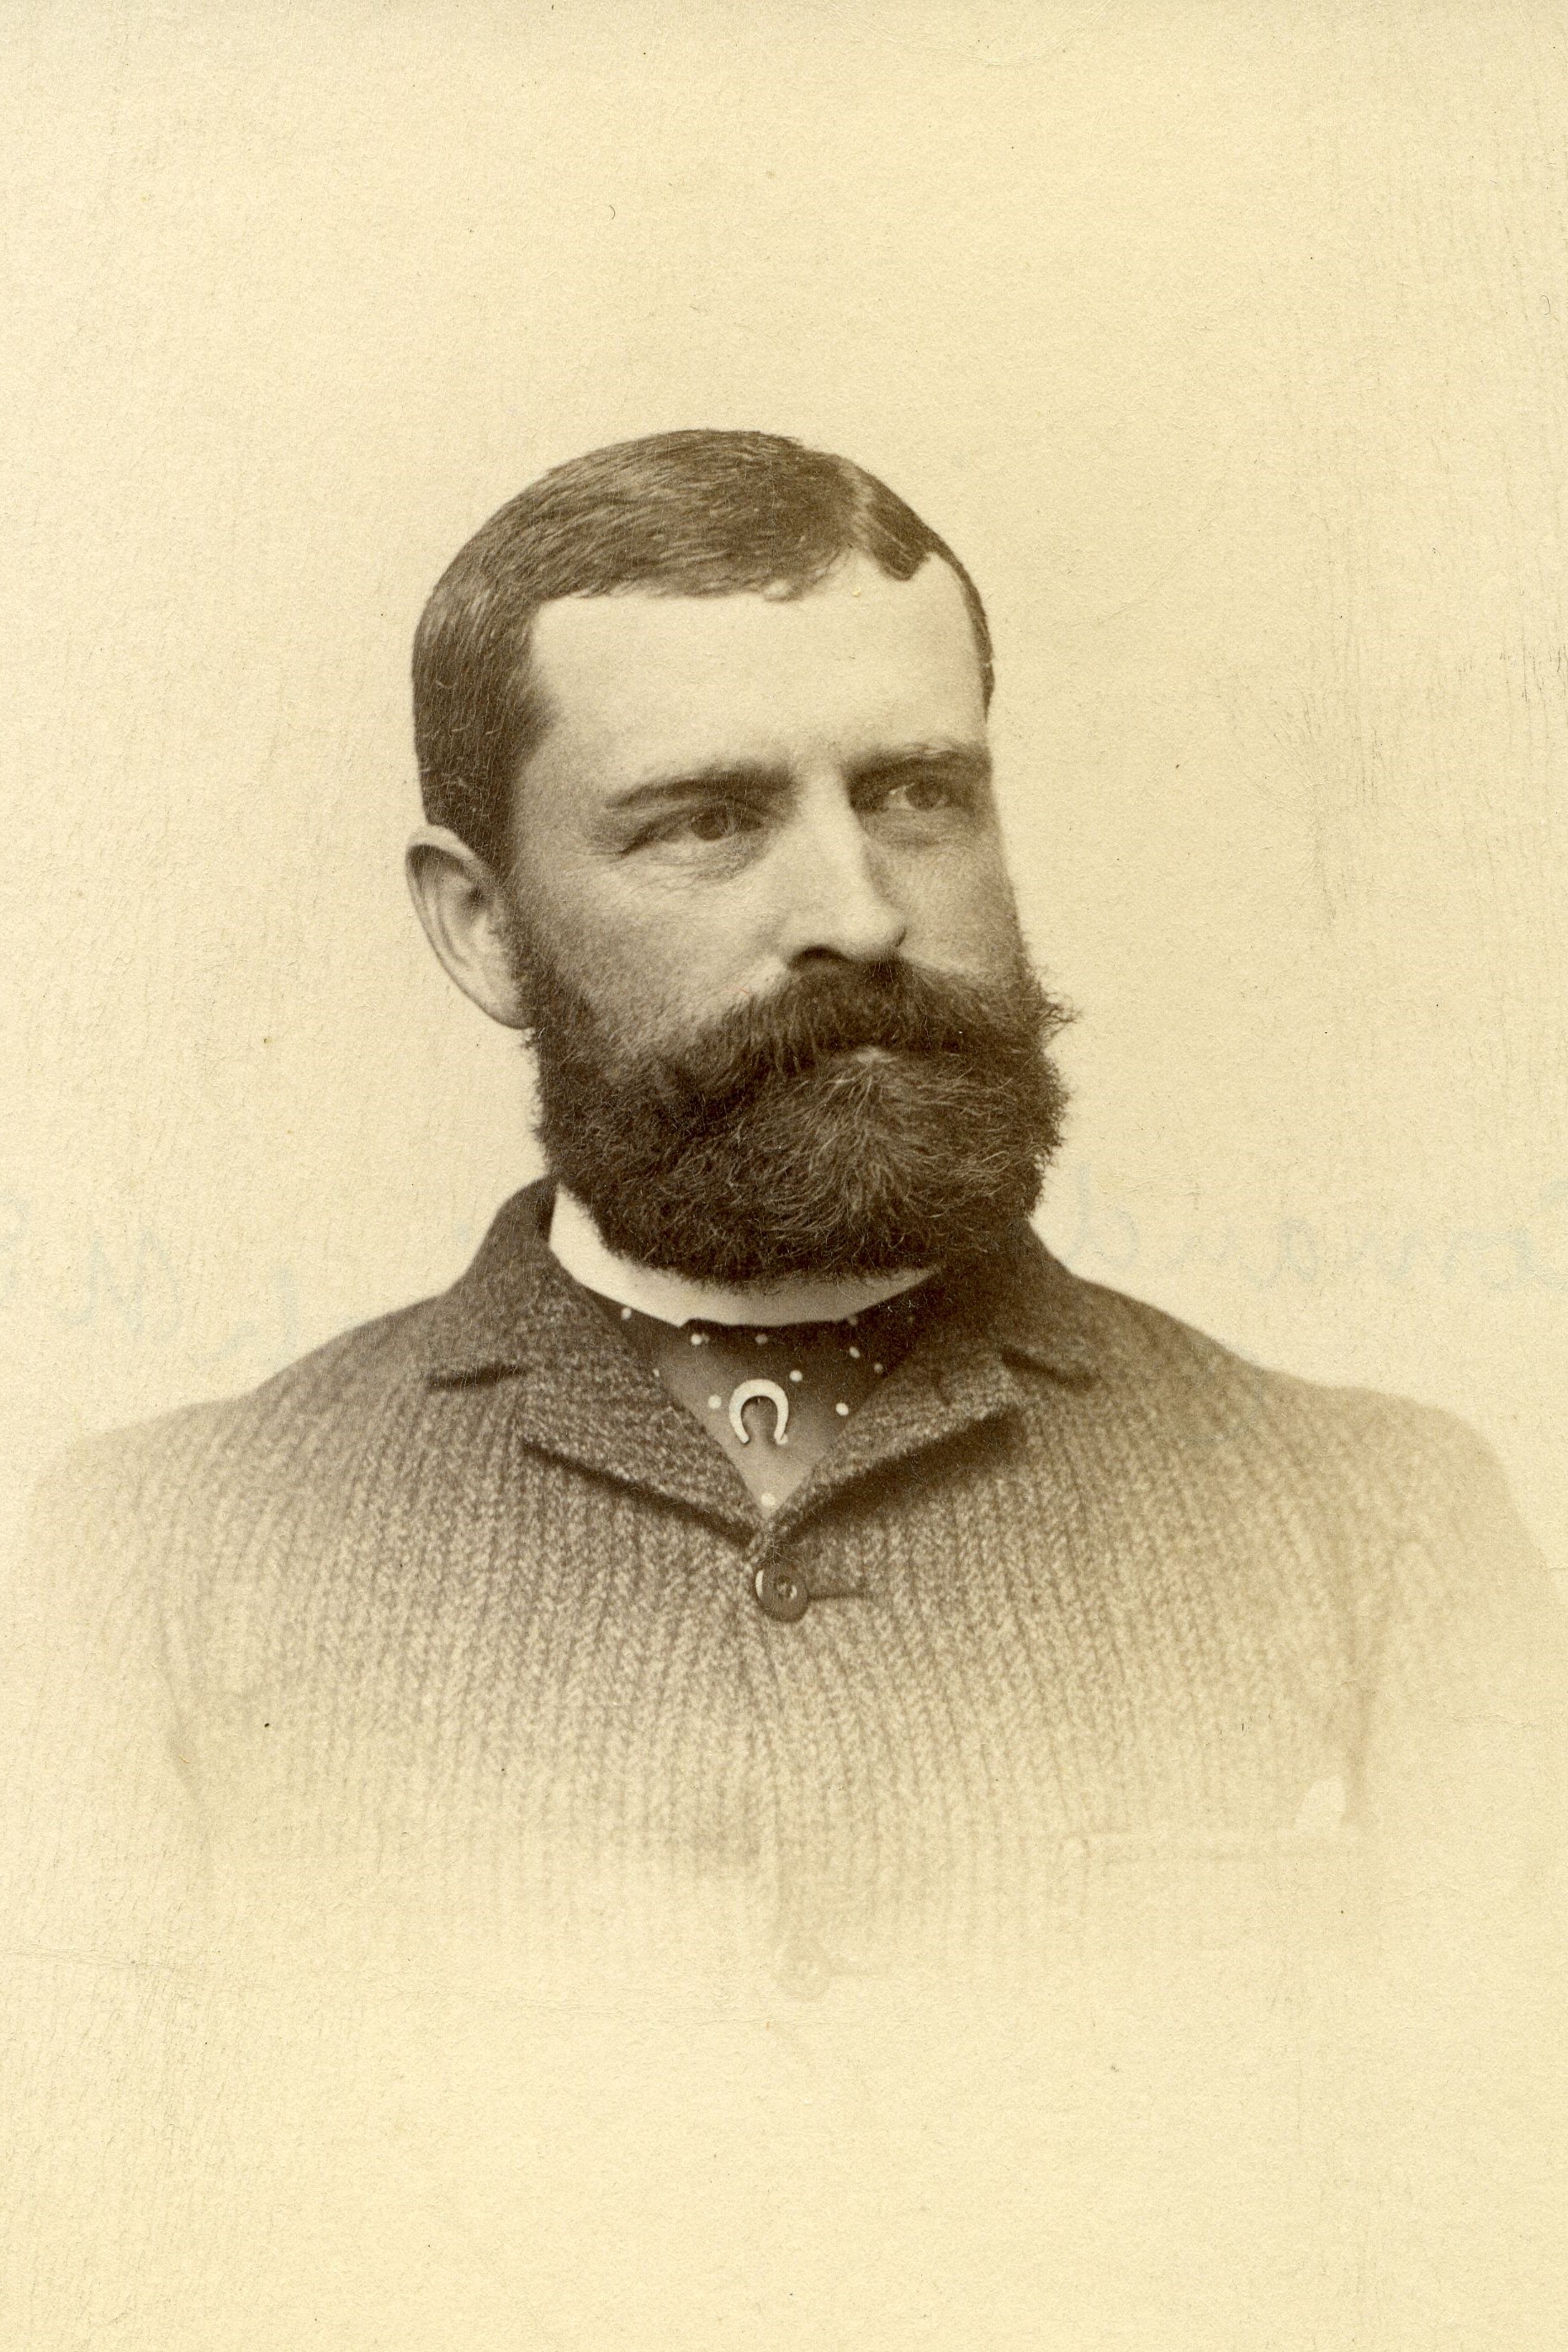 Member portrait of Caspar F. Goodrich